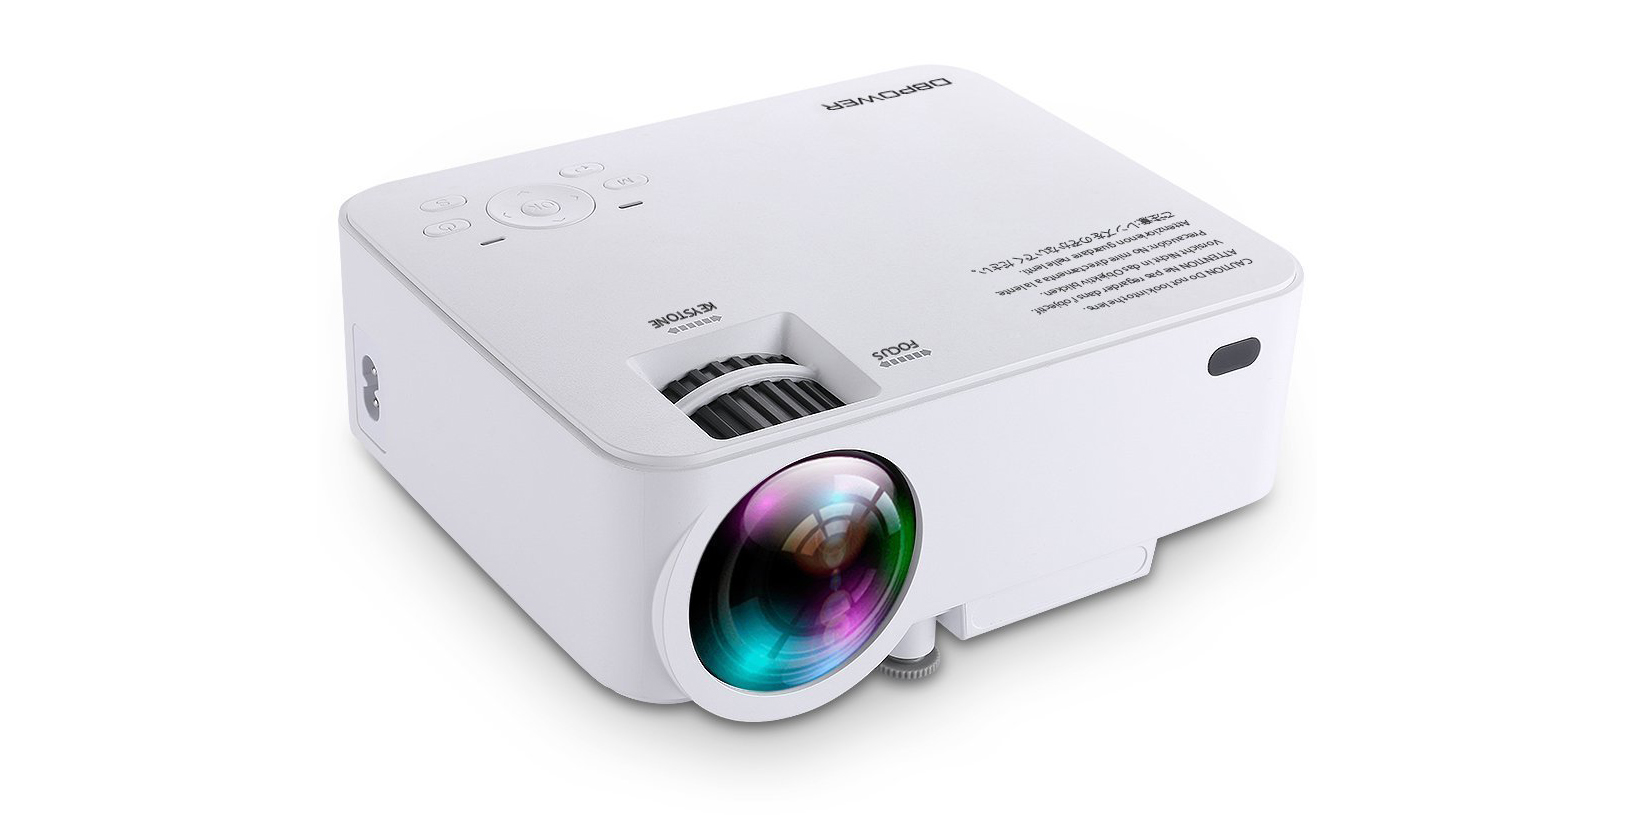 amazon projector returns